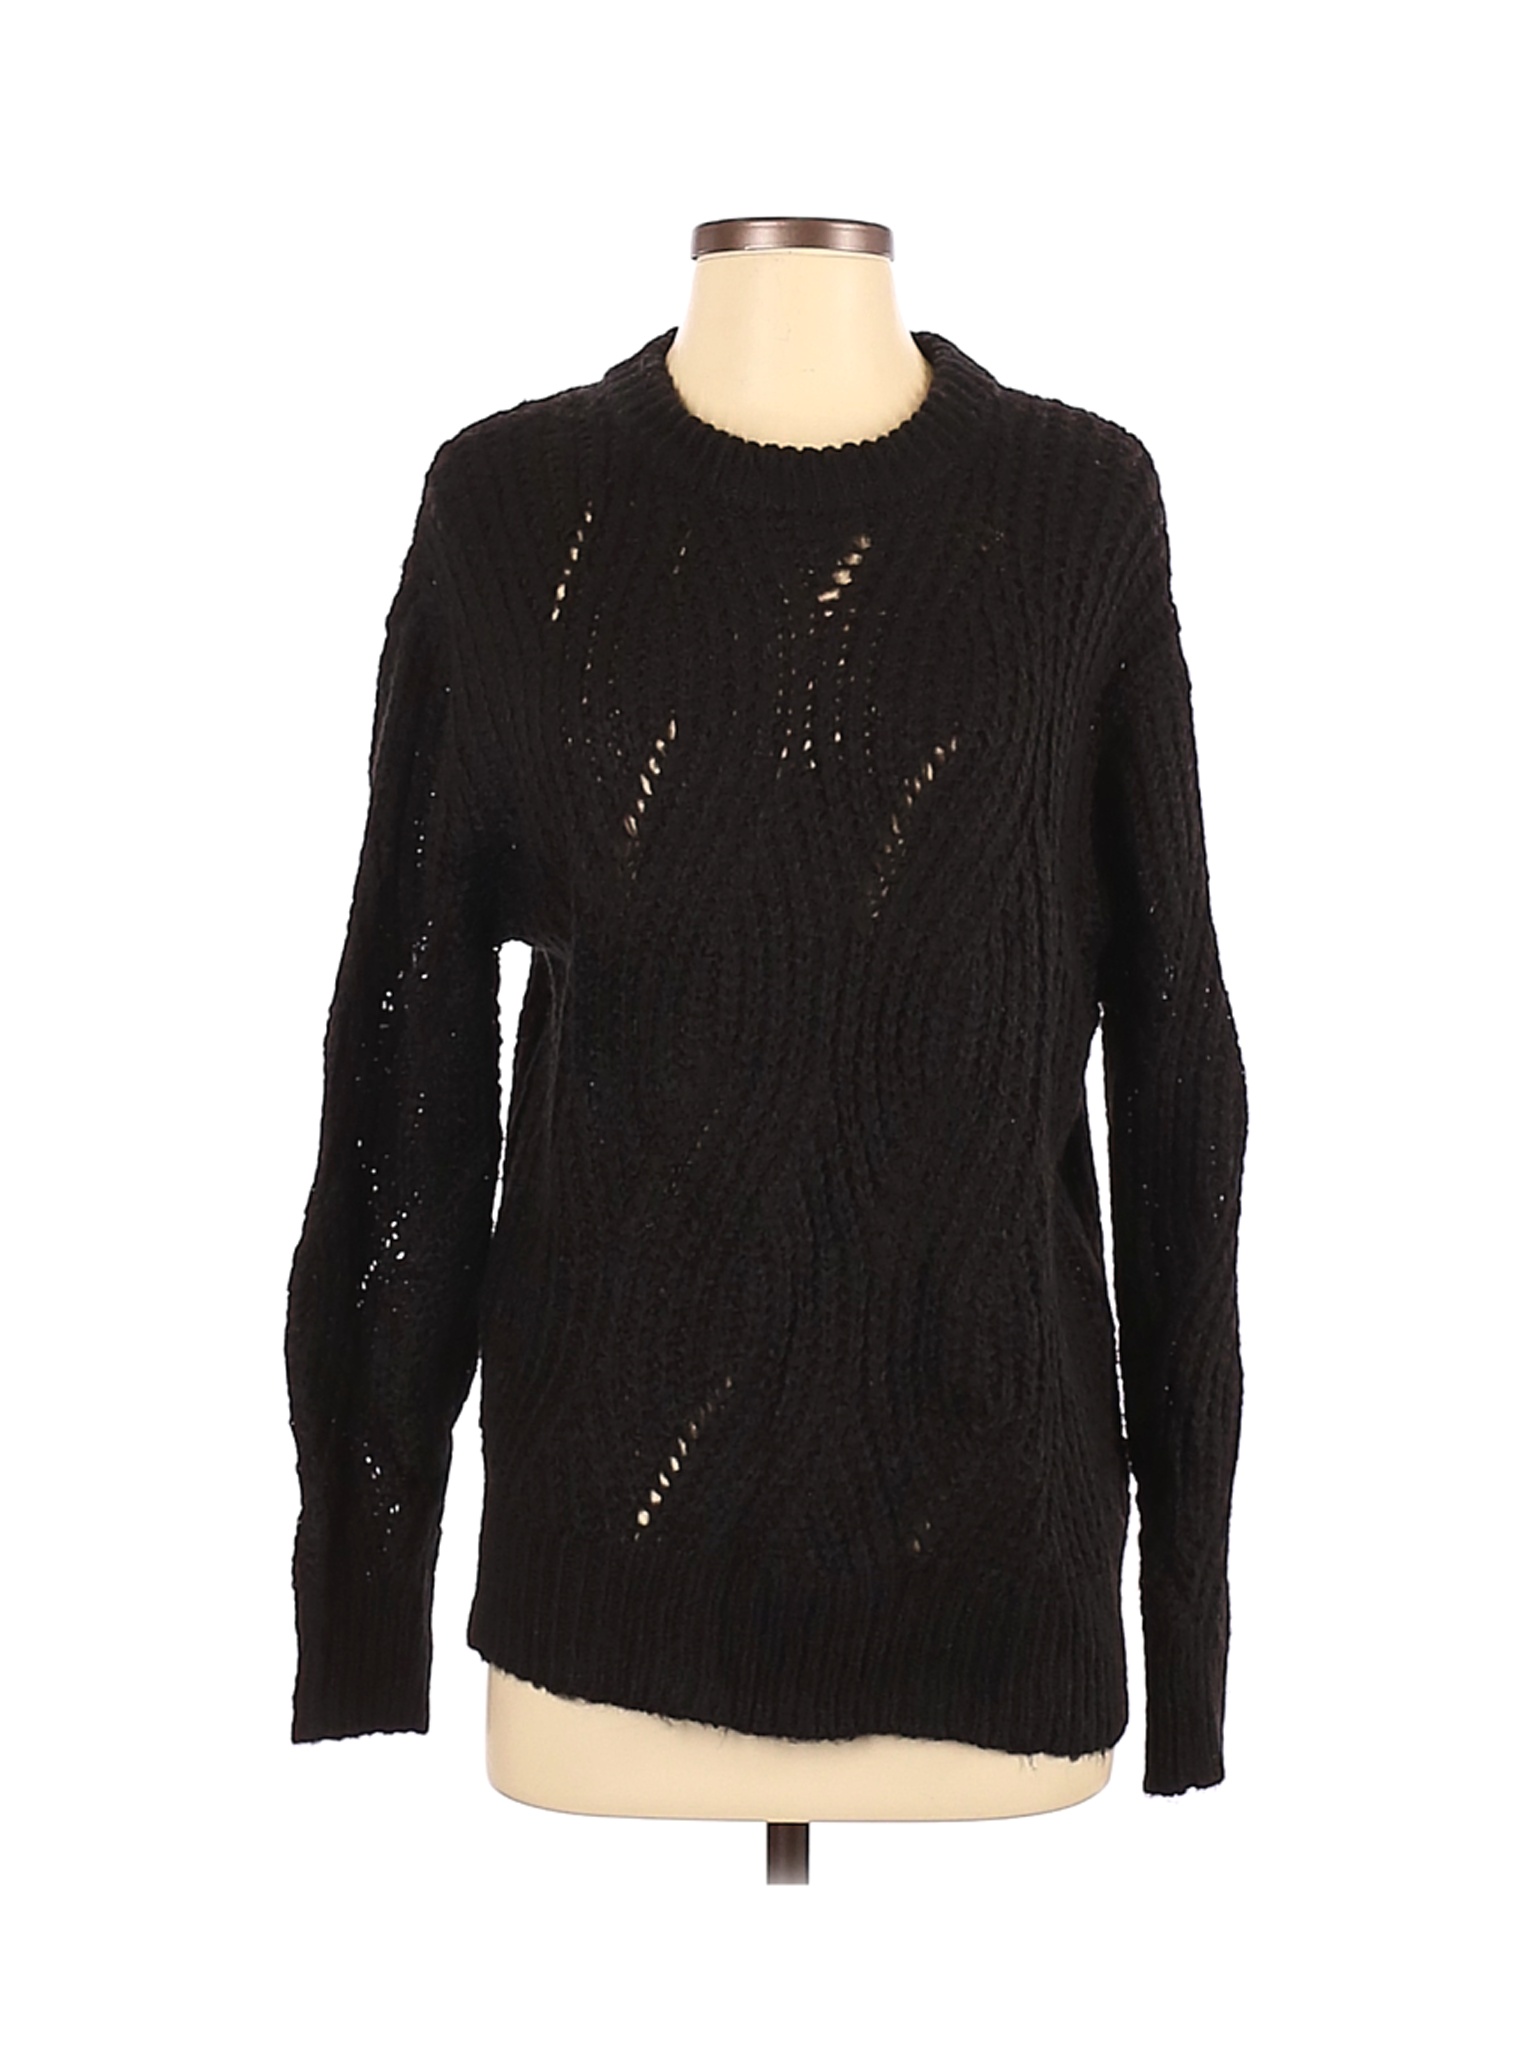 NWT RXB Women Black Pullover Sweater XS | eBay